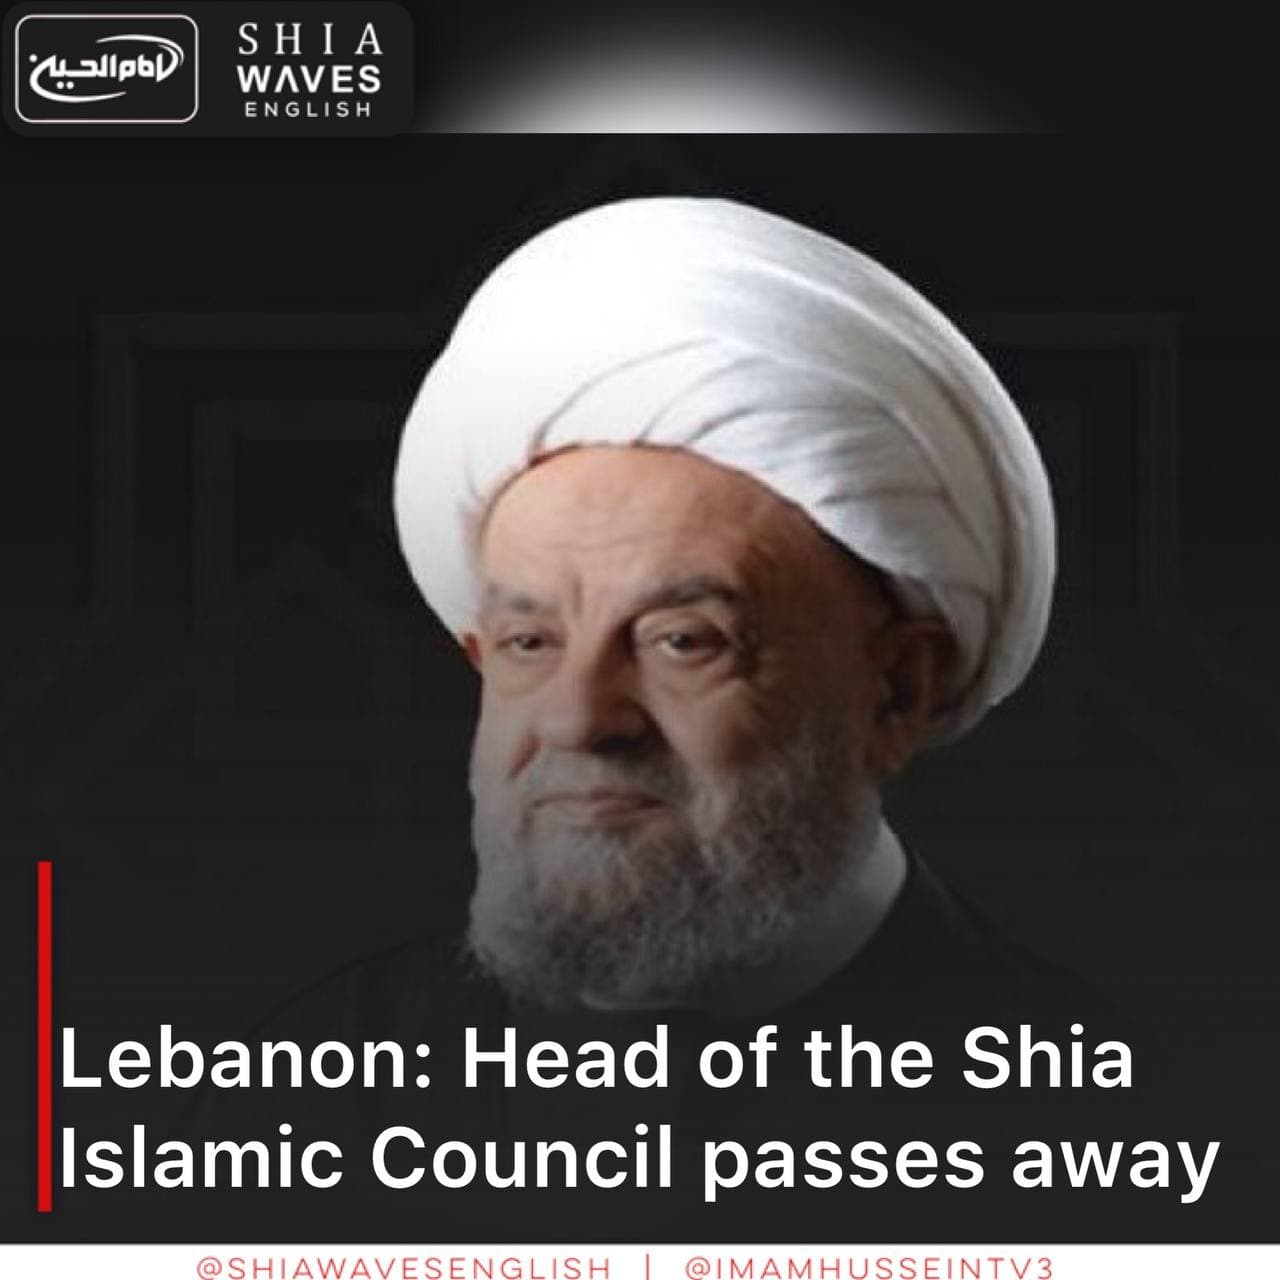 Lebanon: Head of the Shia Islamic Council passes away - Shia Waves